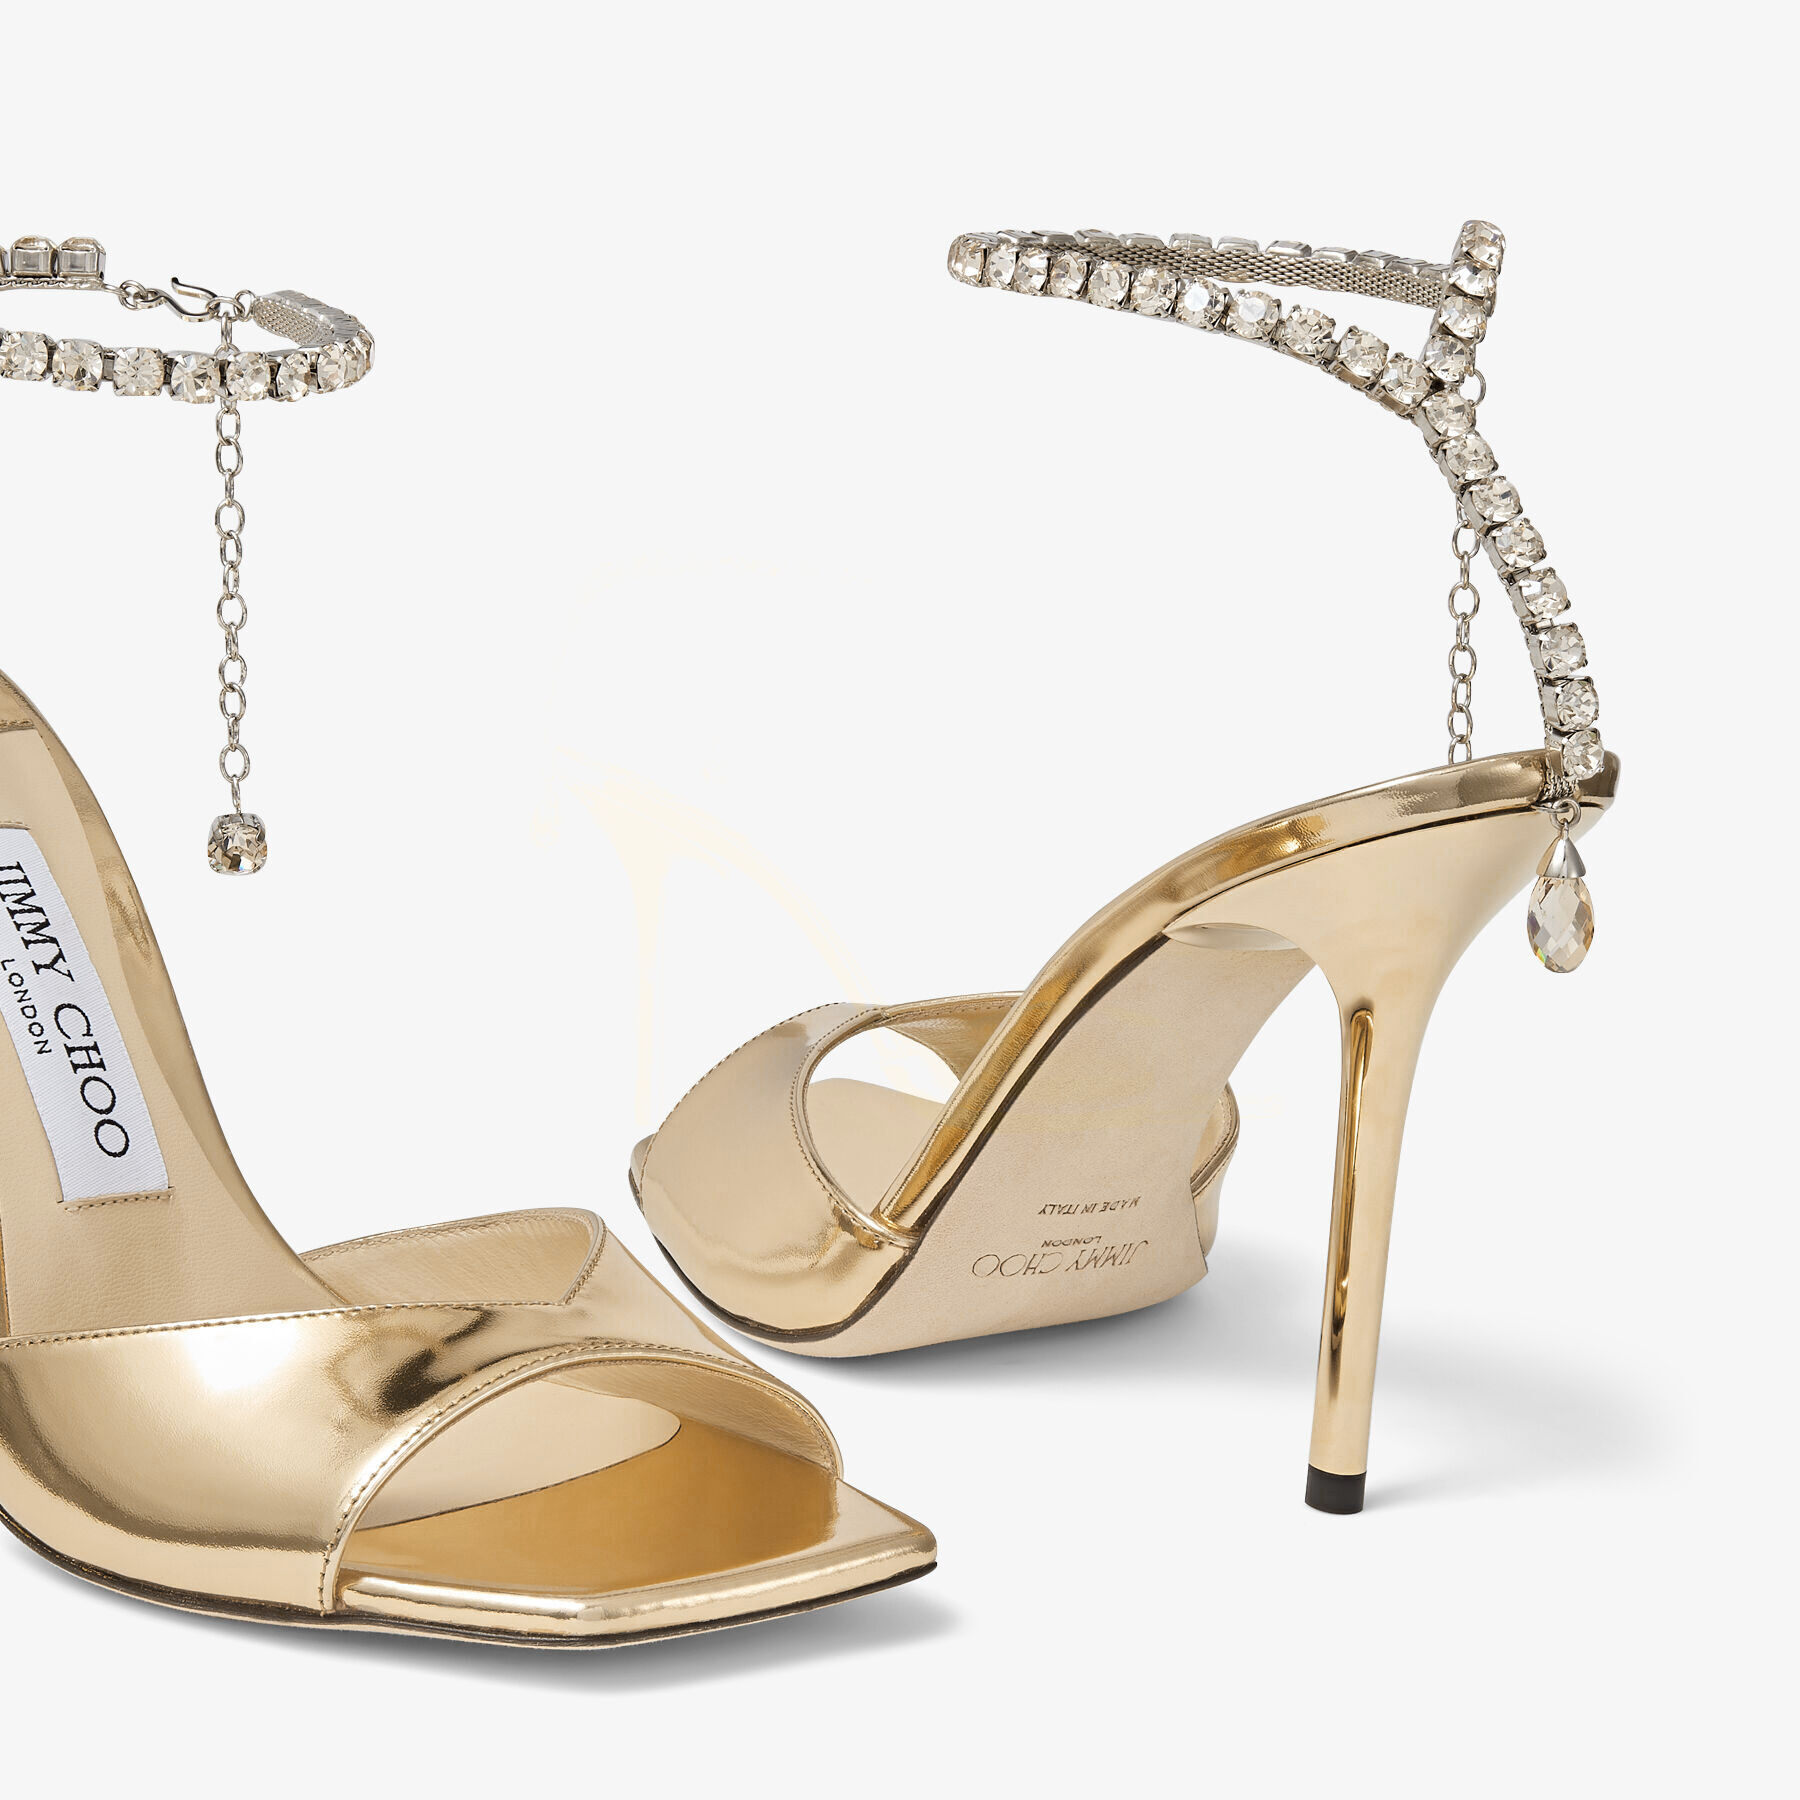 SAEDA SANDAL 100 | Gold Liquid Metal Sandals with Crystal Embellishment ...